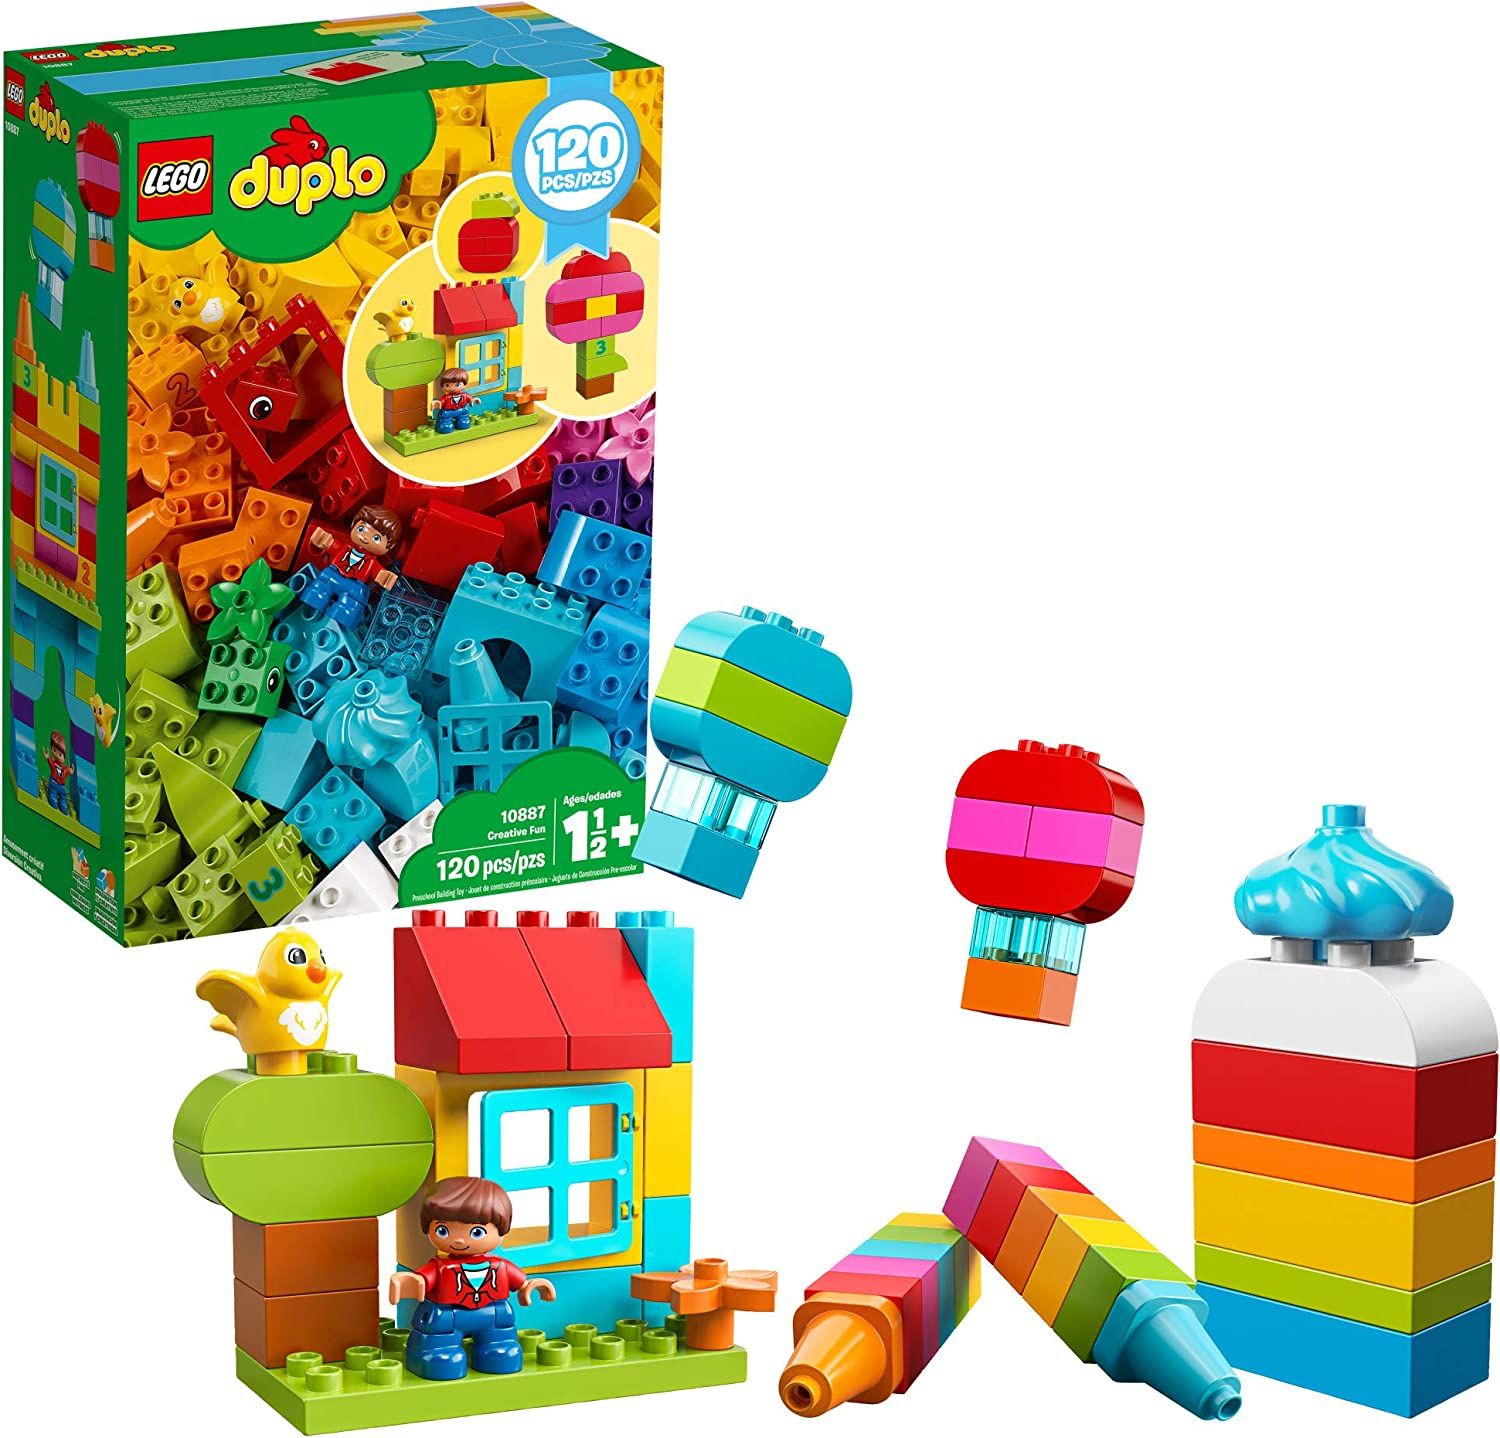 LEGO DUPLO Classic Creative Fun 10887 Building Kit, New 2020 (120 Pieces) | Amazon (US)